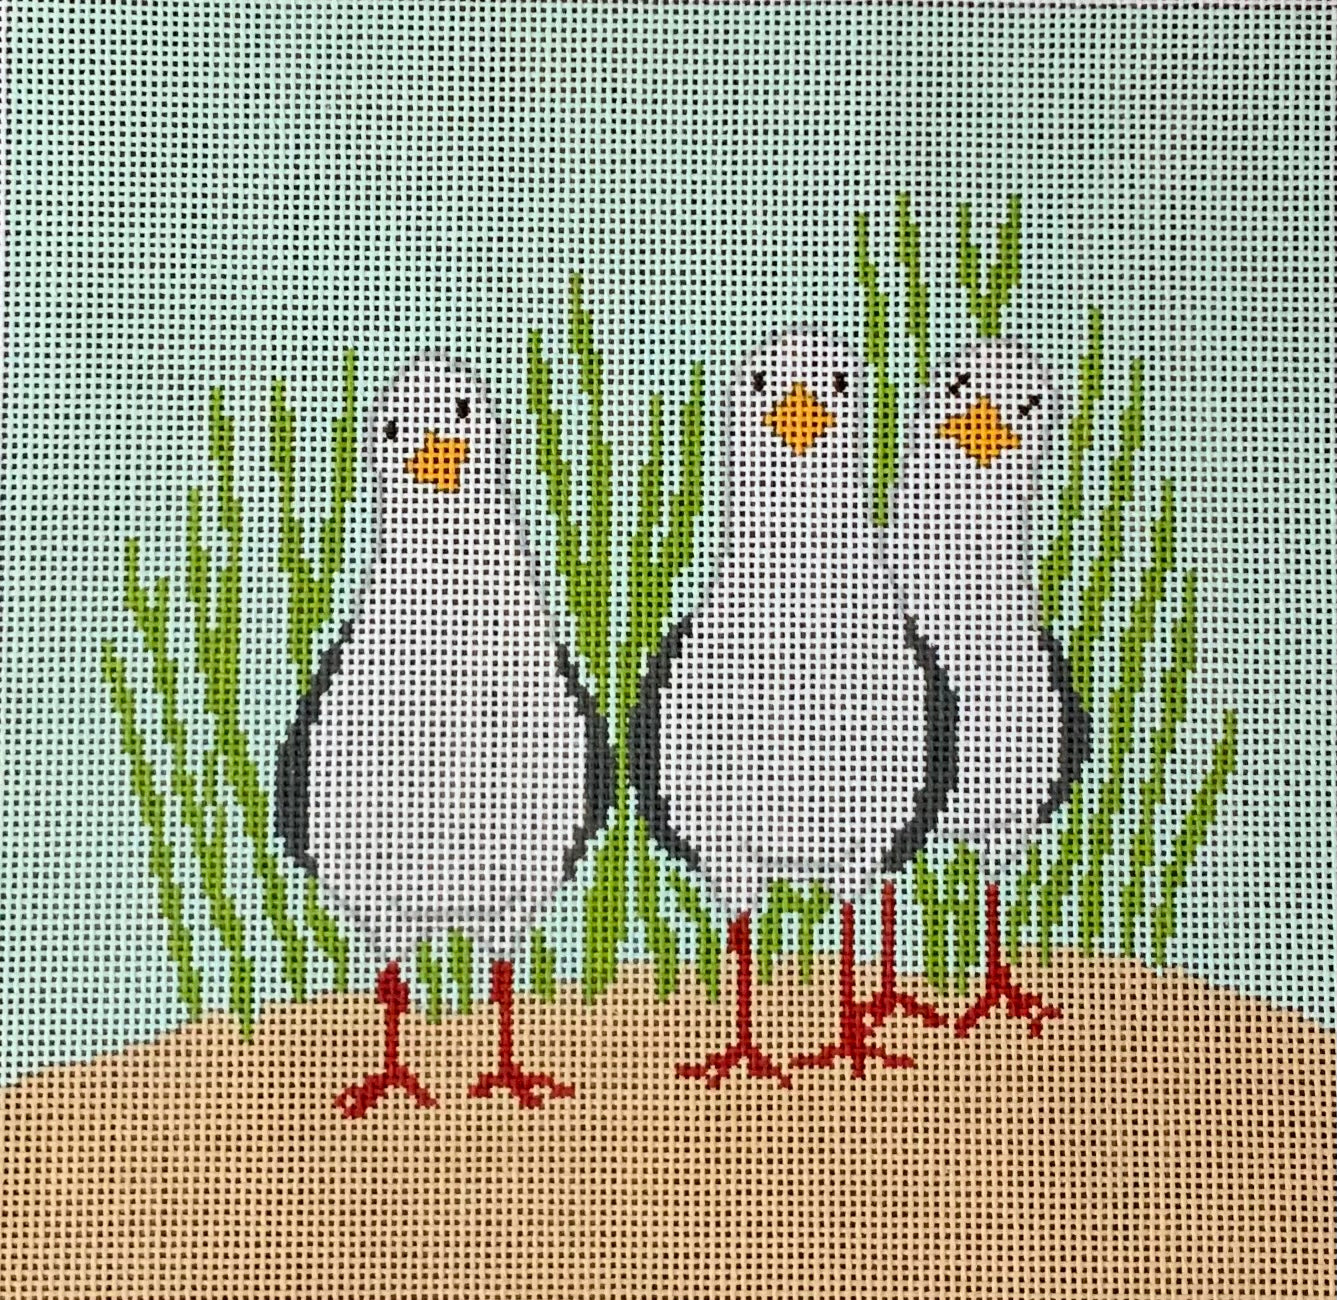 3 Standing Seagulls